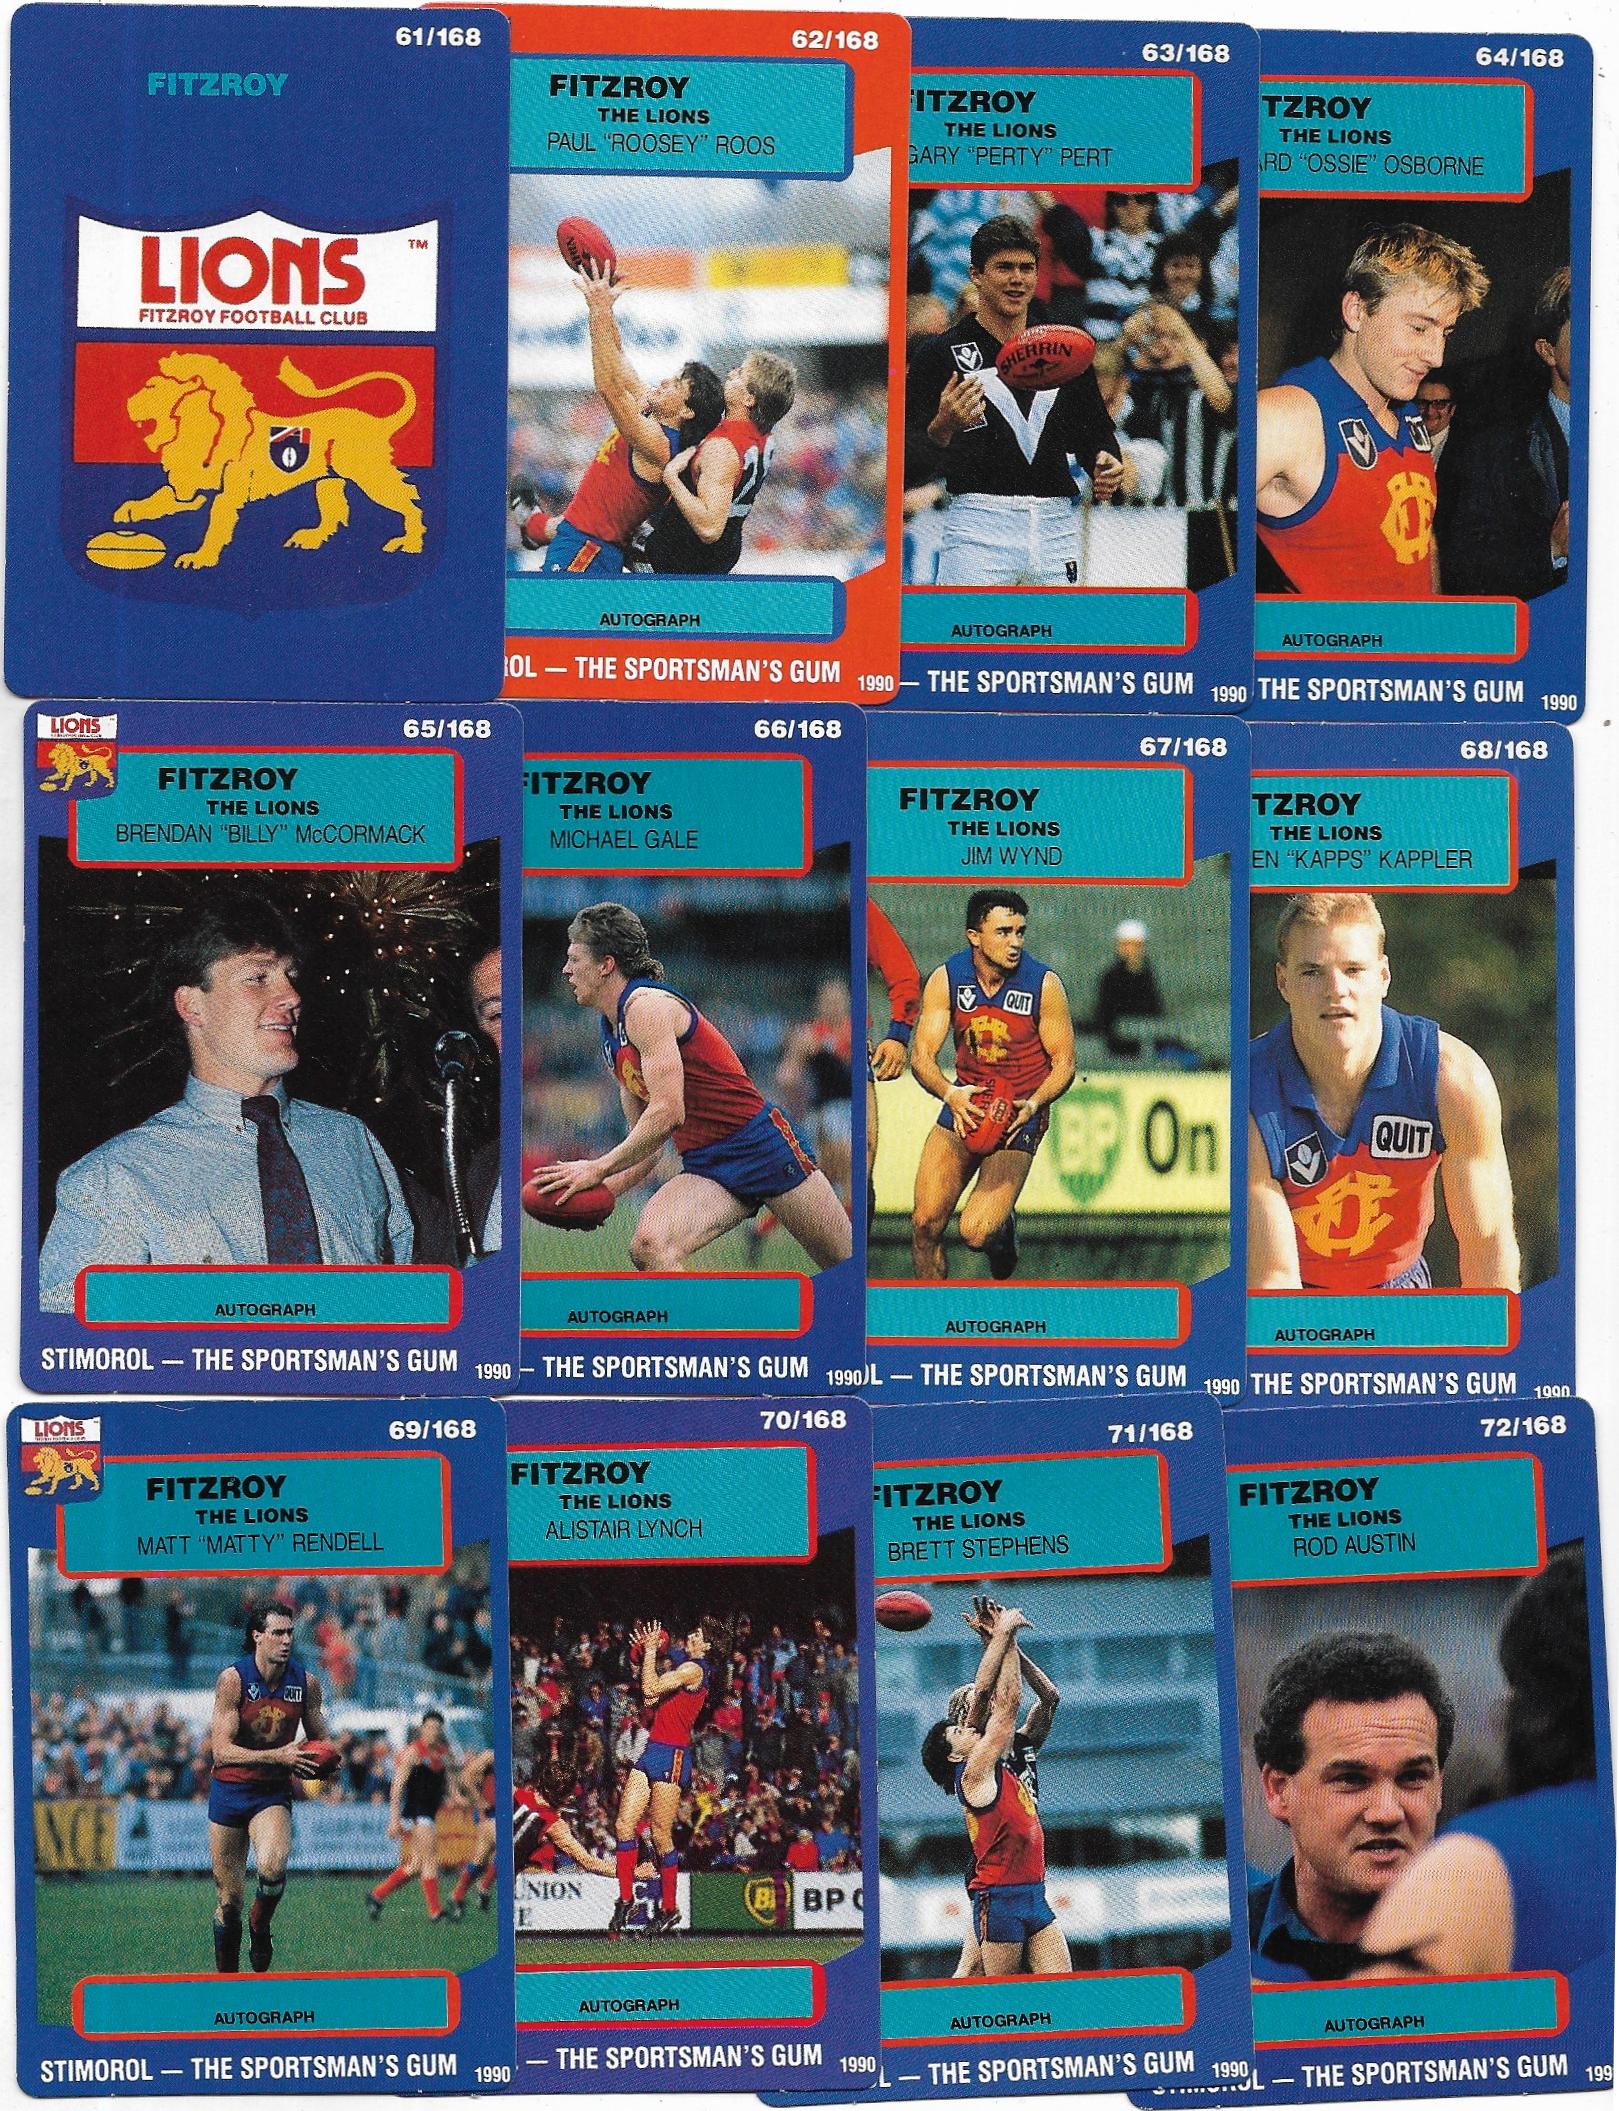 1990 Stimorol Team Set – Fitzroy